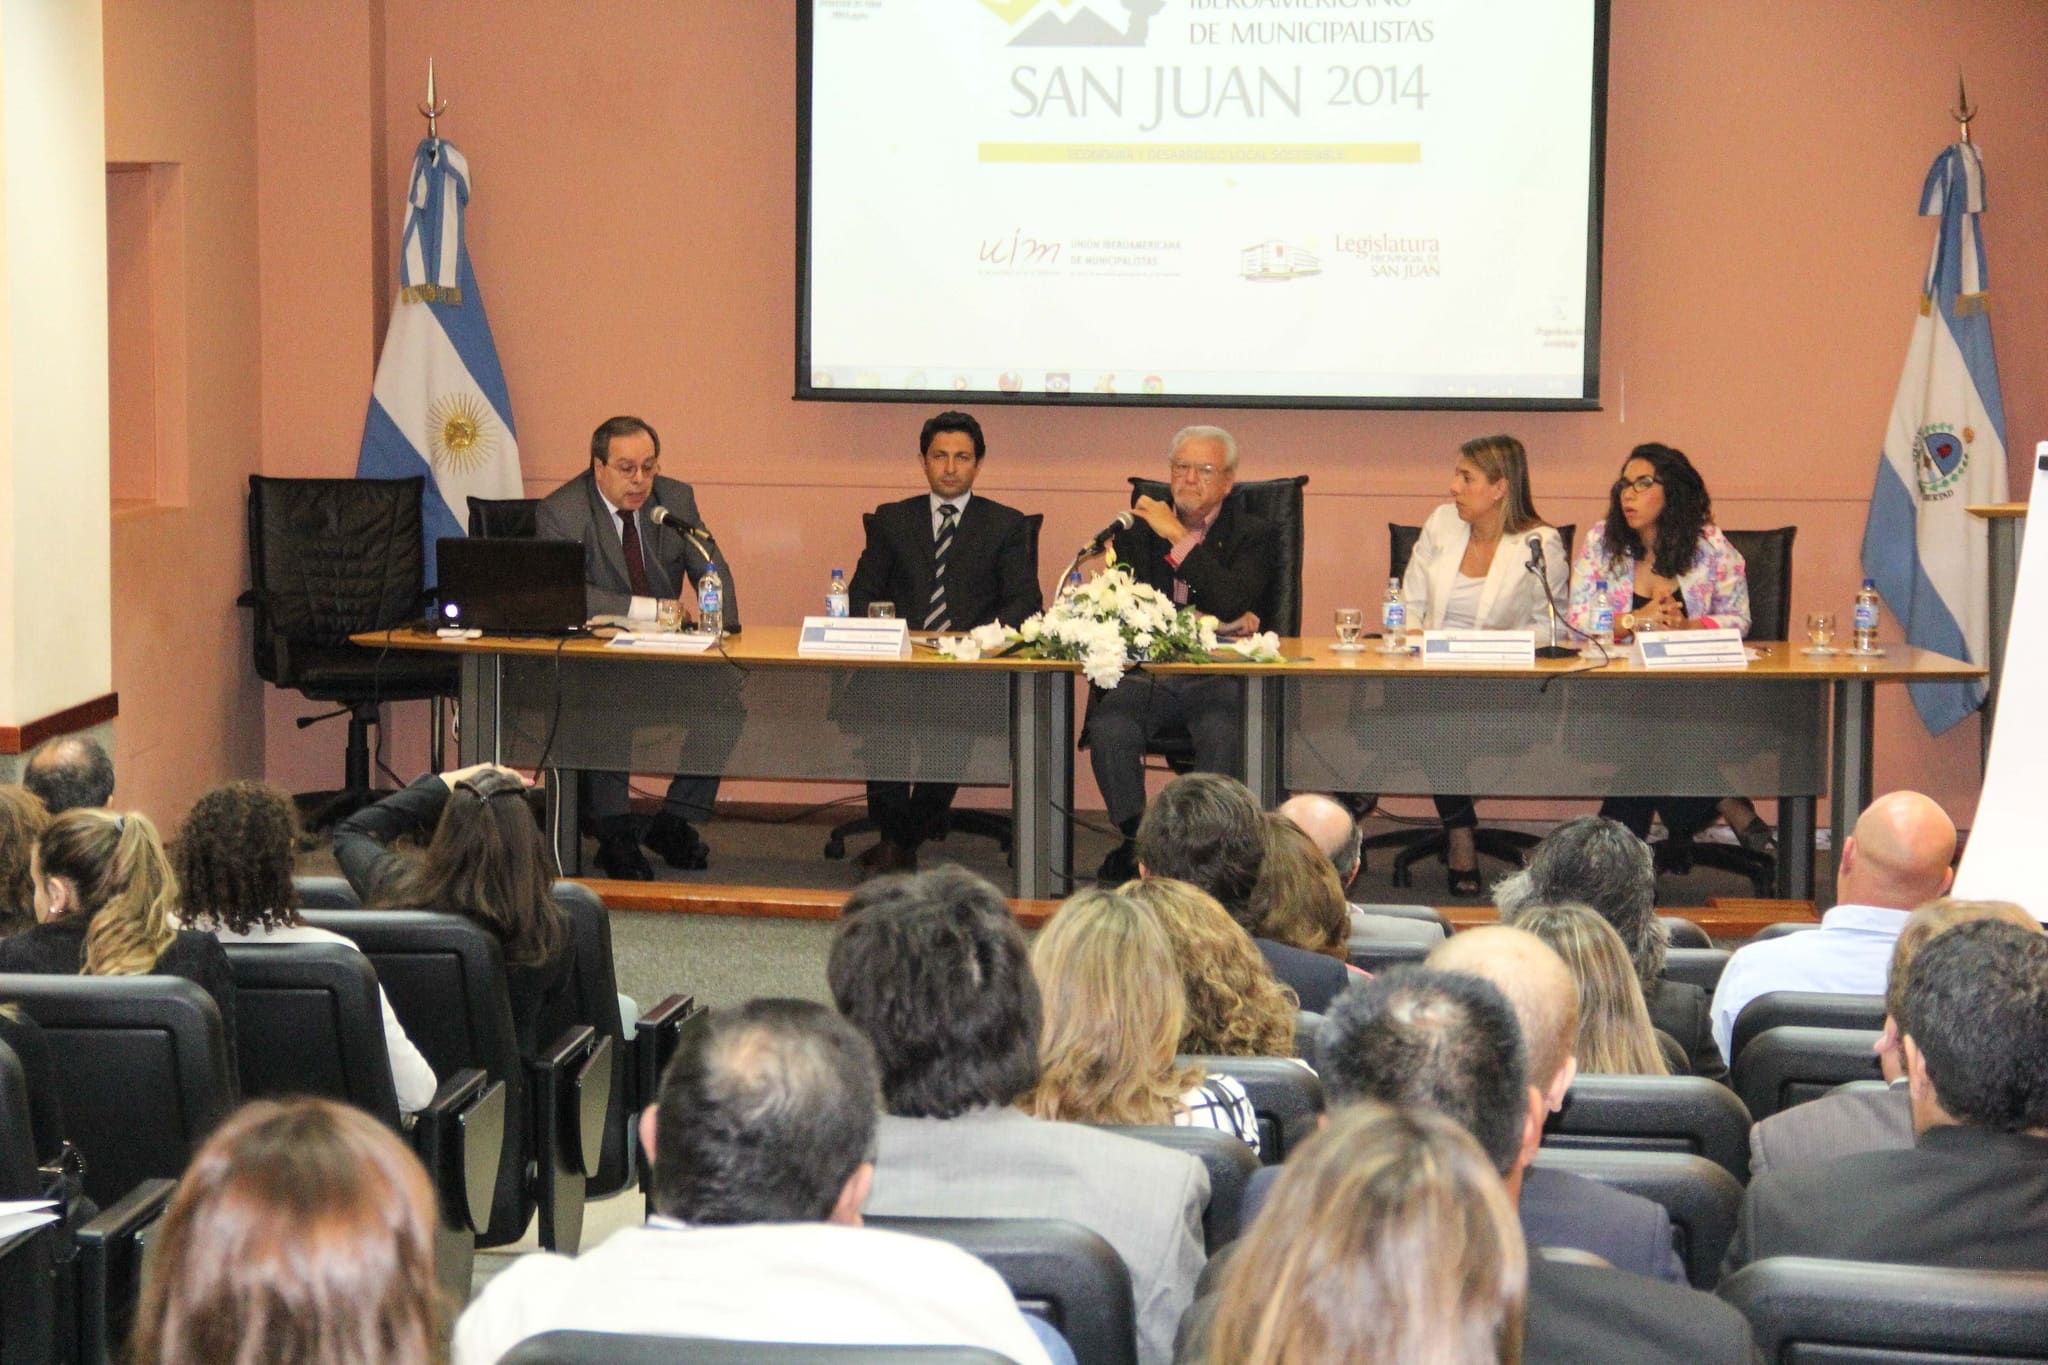 Panel 27 - XI Congreso Iberoamericano de Municipalistas